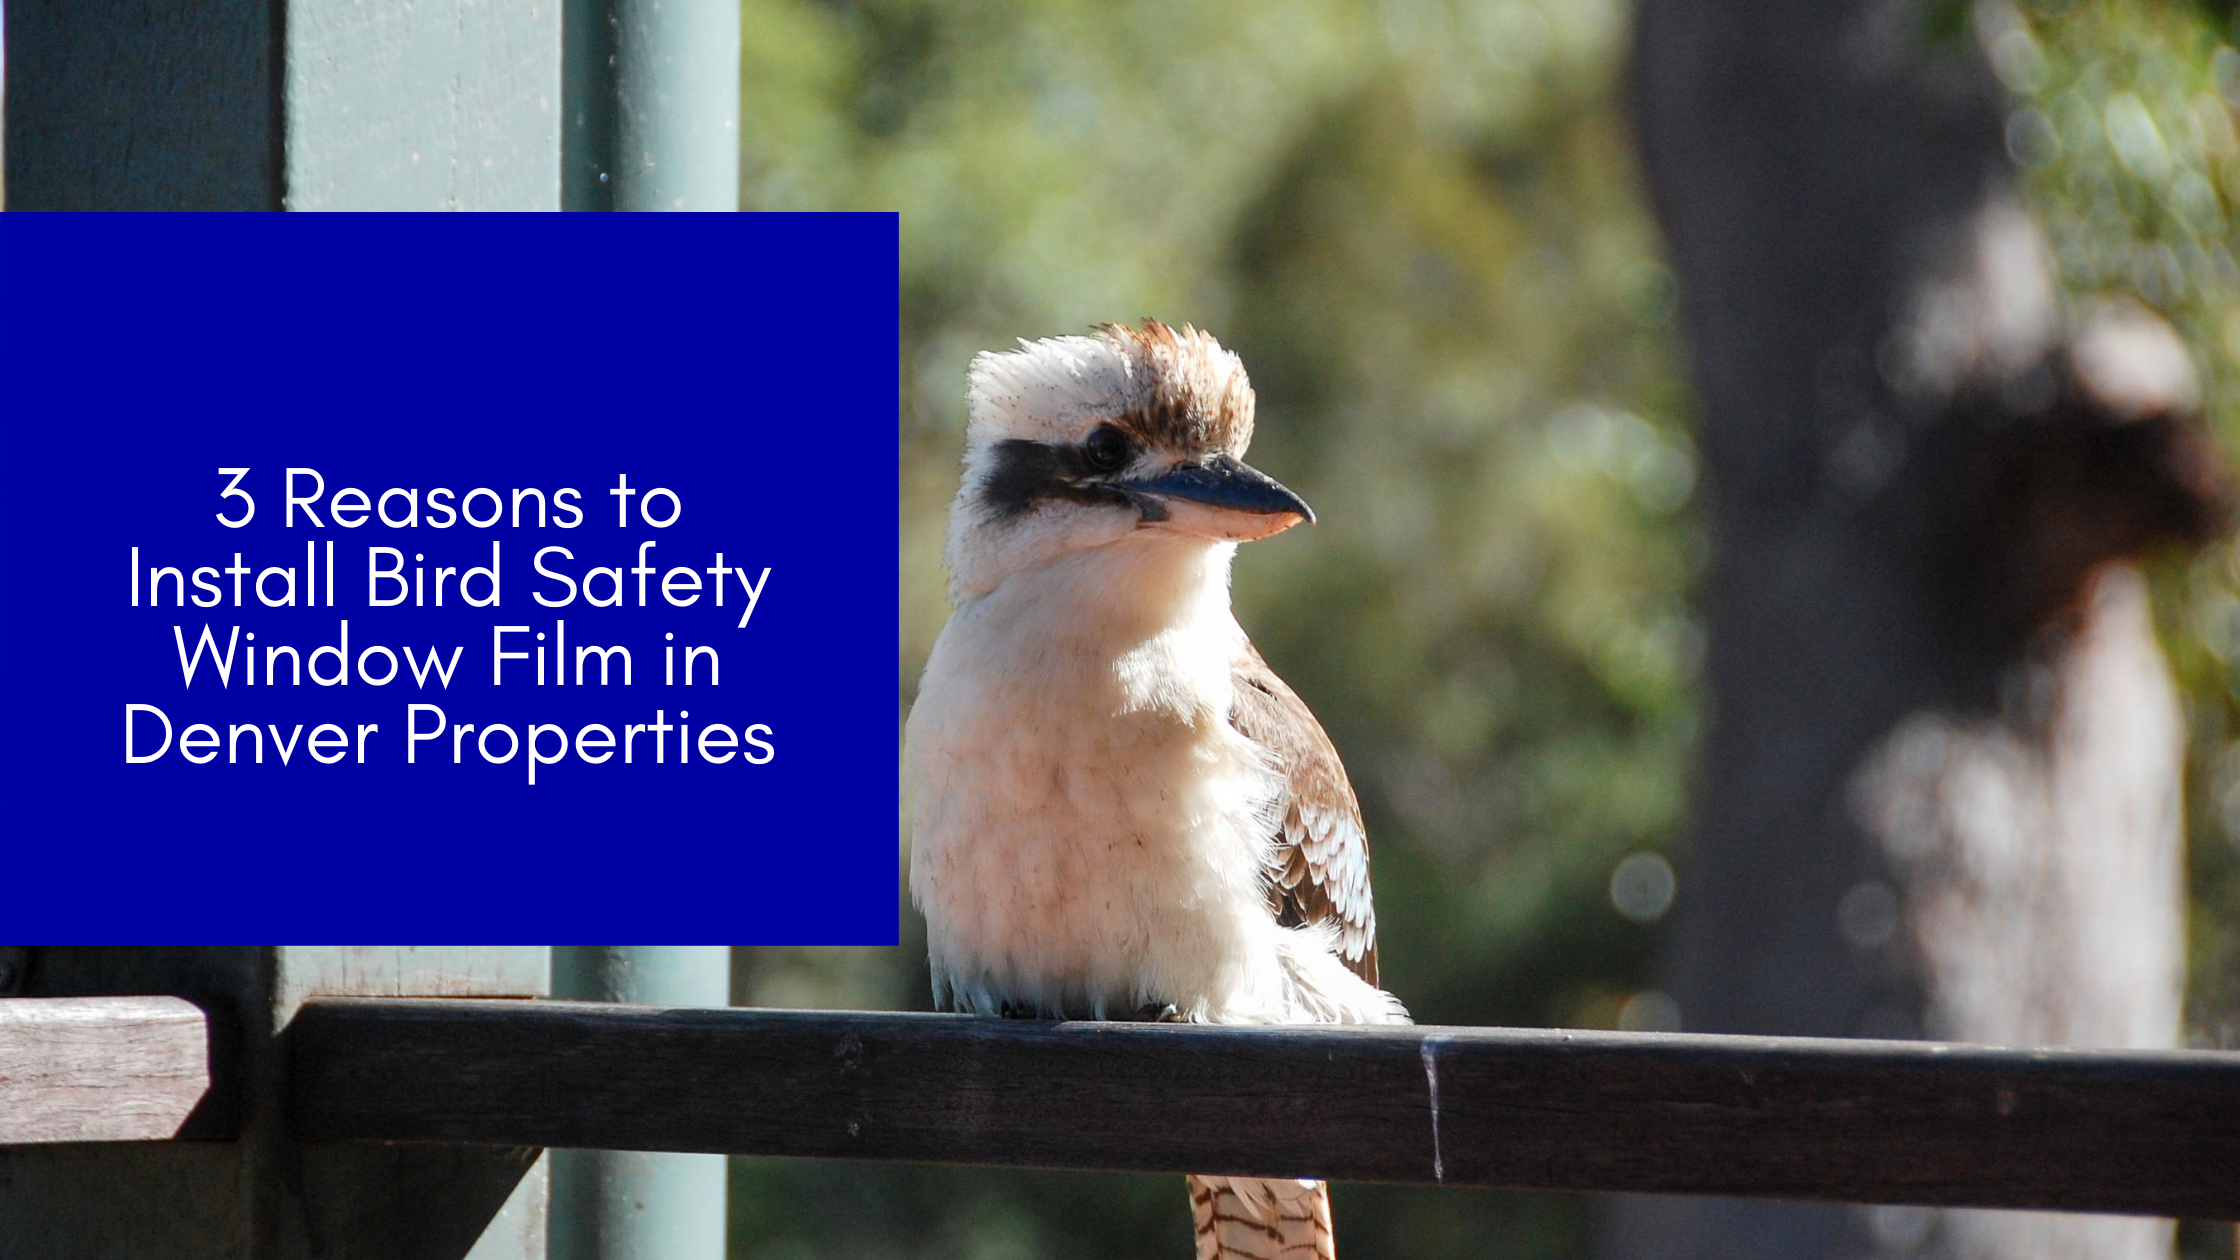 3 Reasons to Install Bird Safety Window Film in Denver Properties